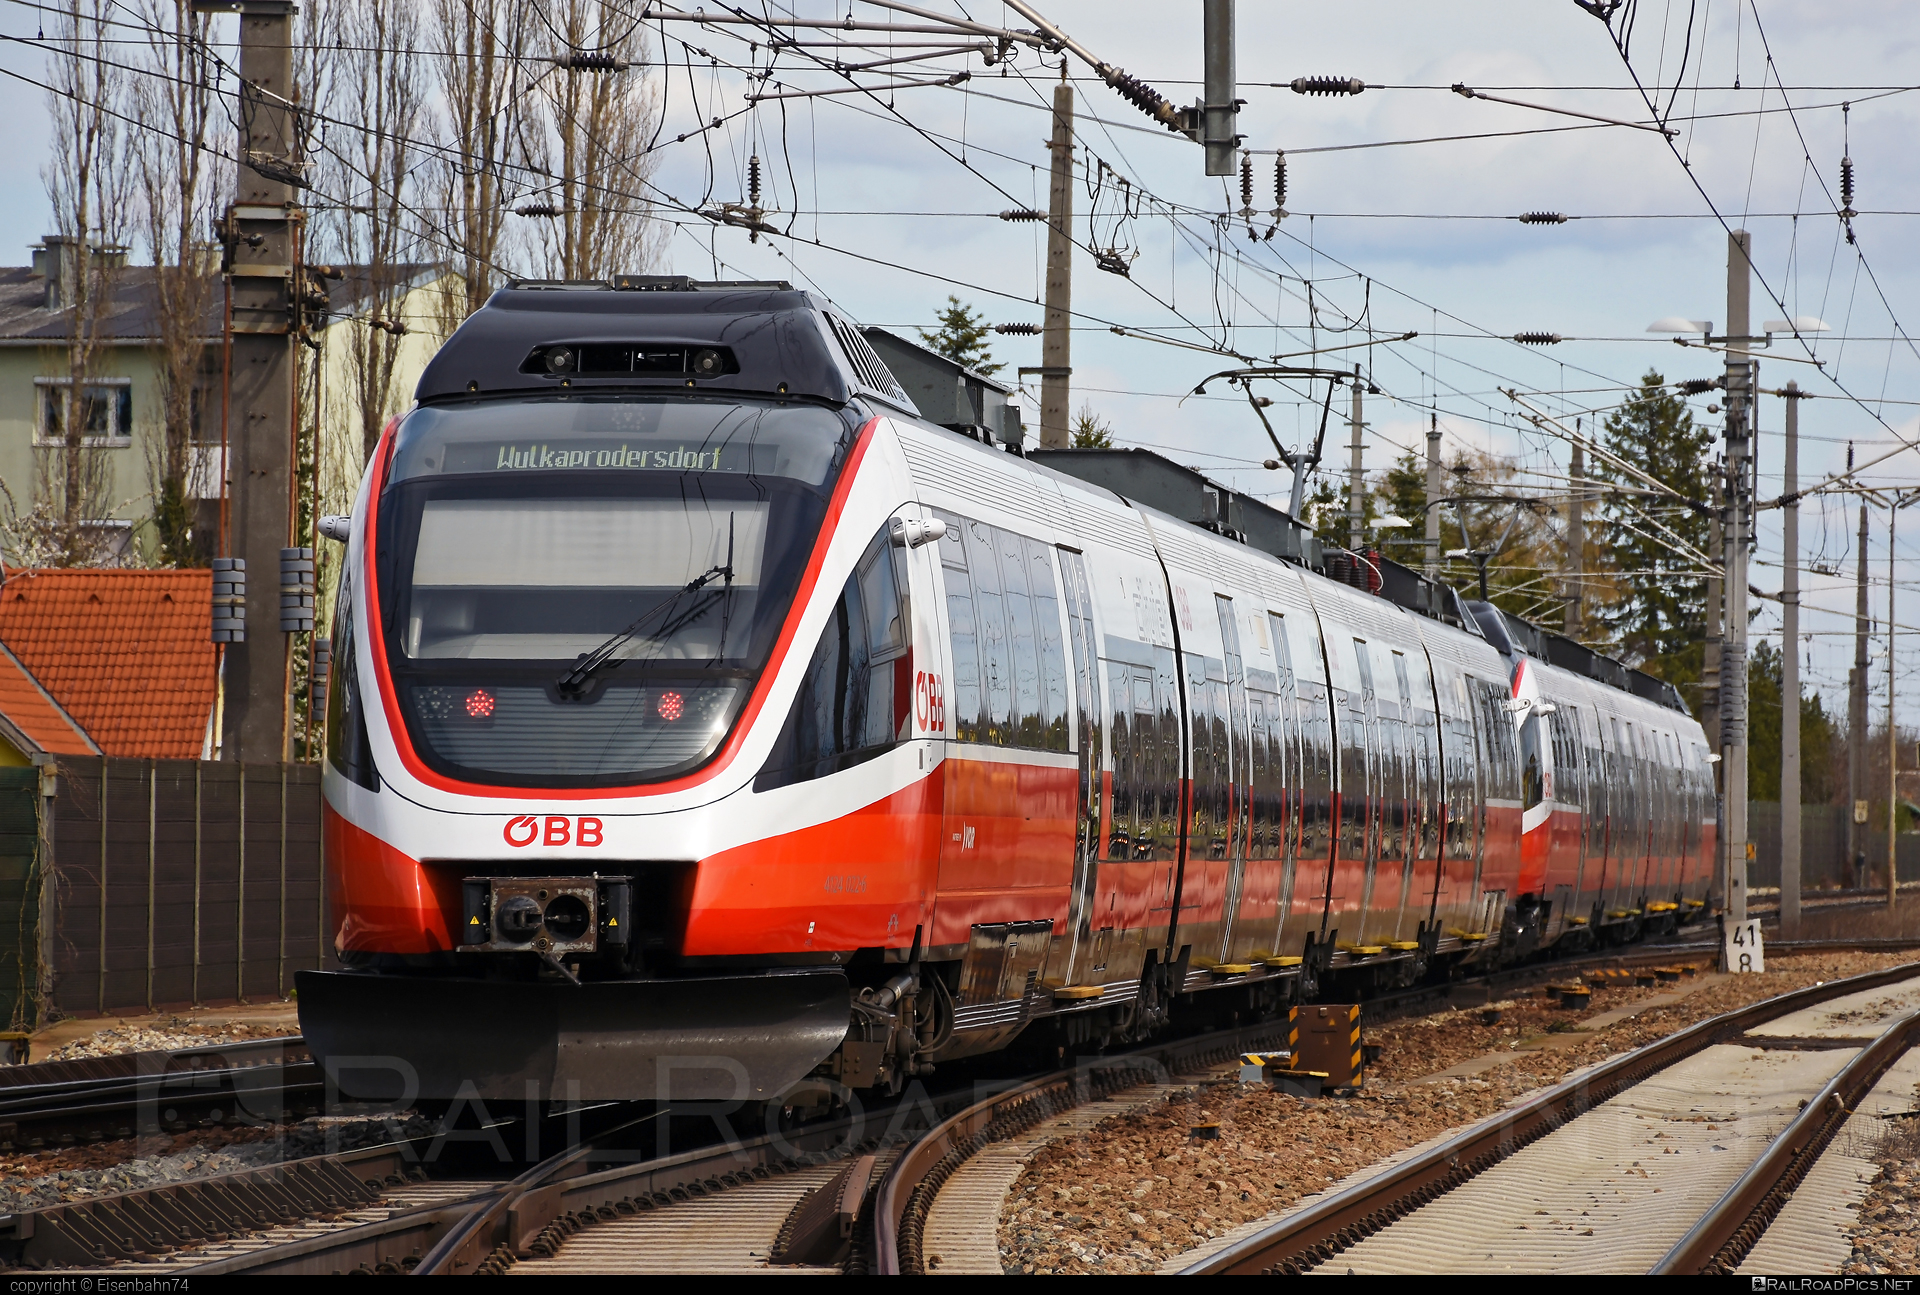 Bombardier Talent - 4124 022-6 operated by Österreichische Bundesbahnen #bombardier #bombardiertalent #cityjet #obb #obbcityjet #osterreichischebundesbahnen